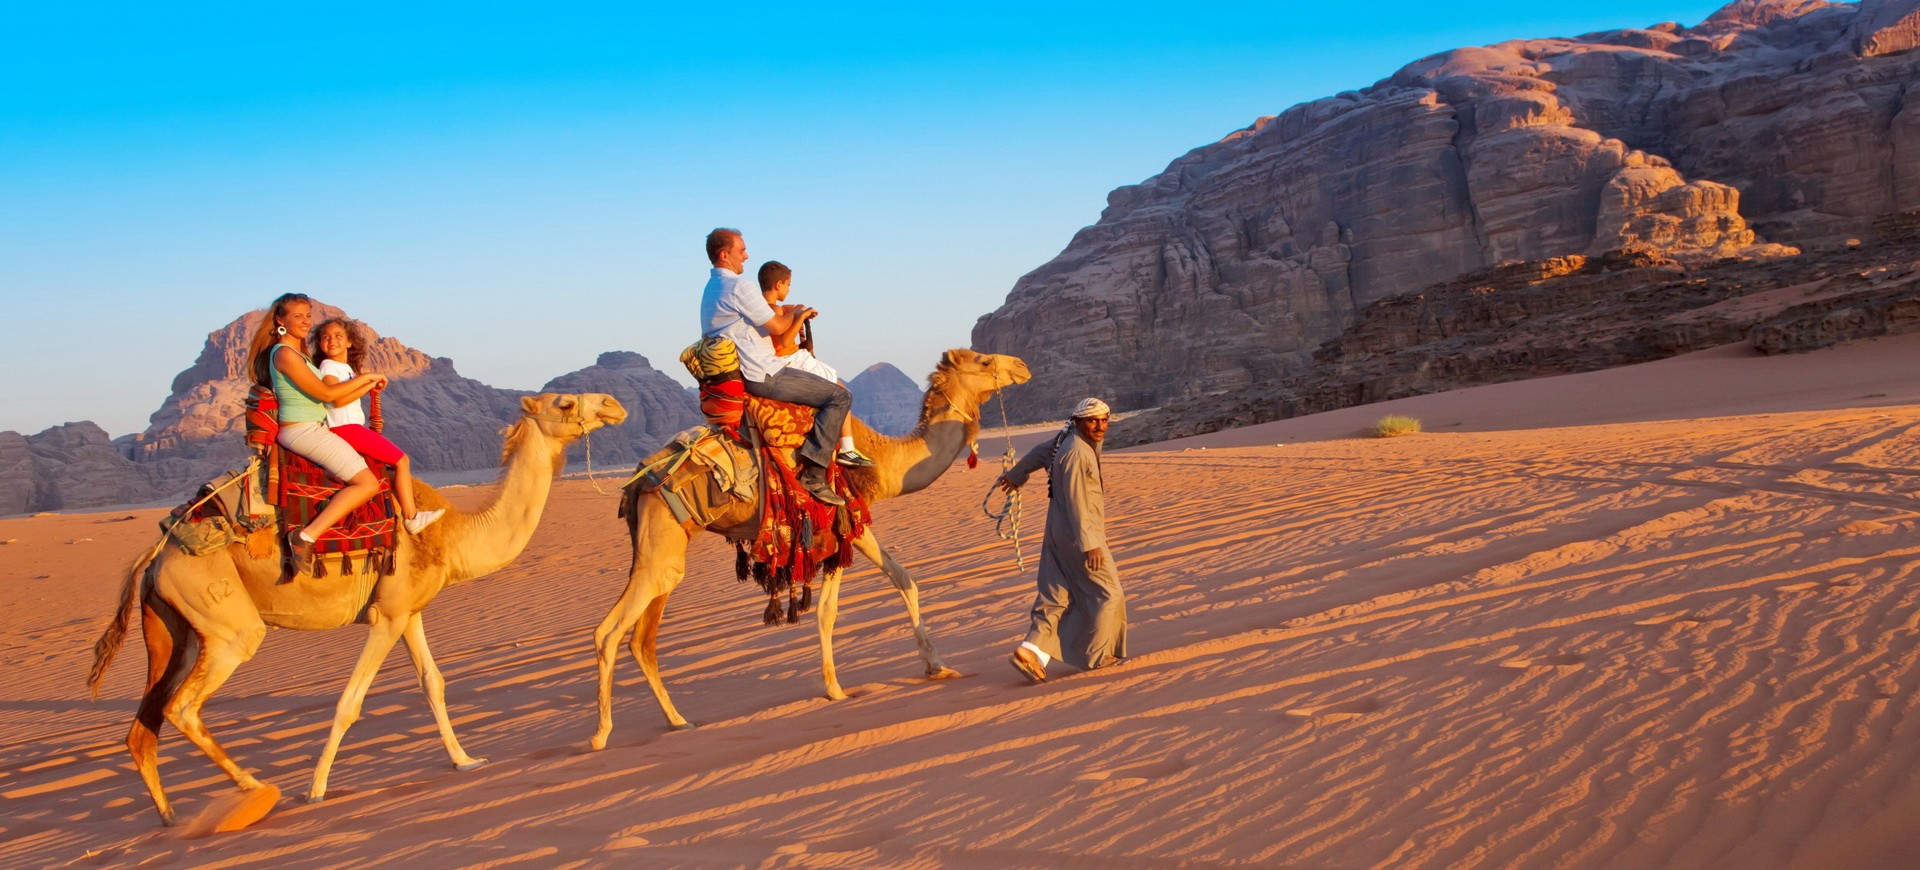 Jordanie Wadi Rum balade à dos de Chameaux